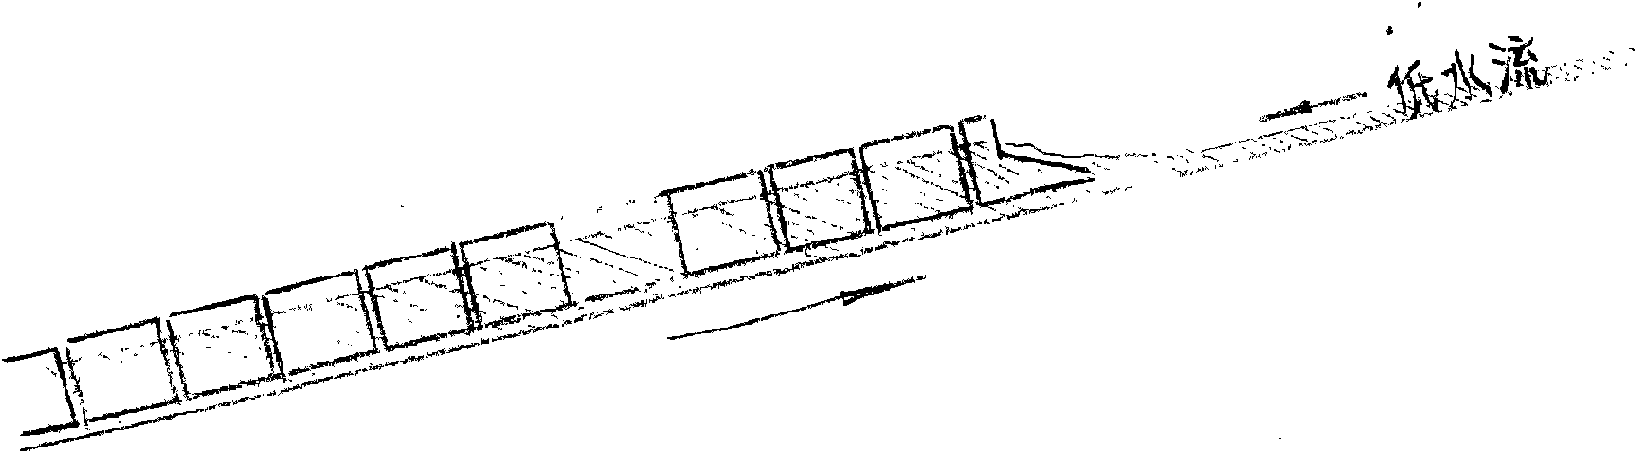 Ship and trough transportation mode for trough transportation system